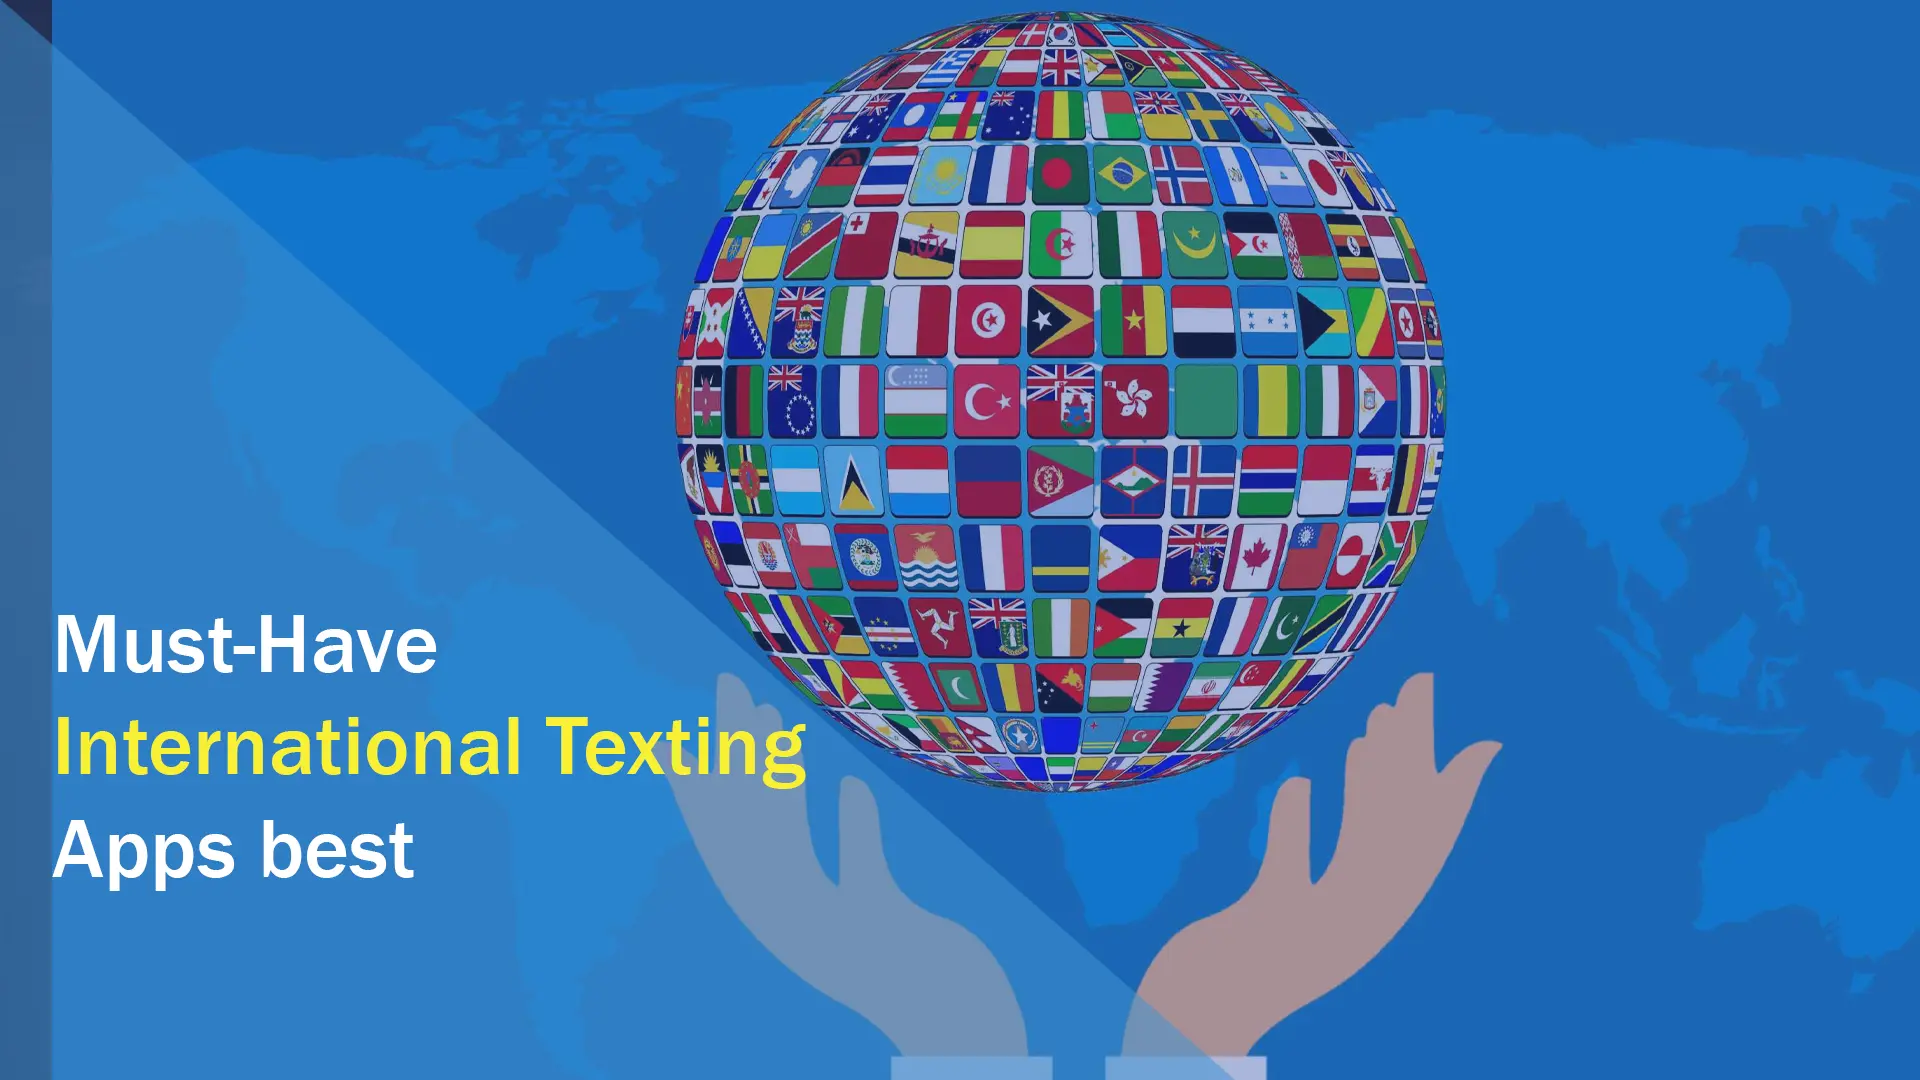 International Texting Apps